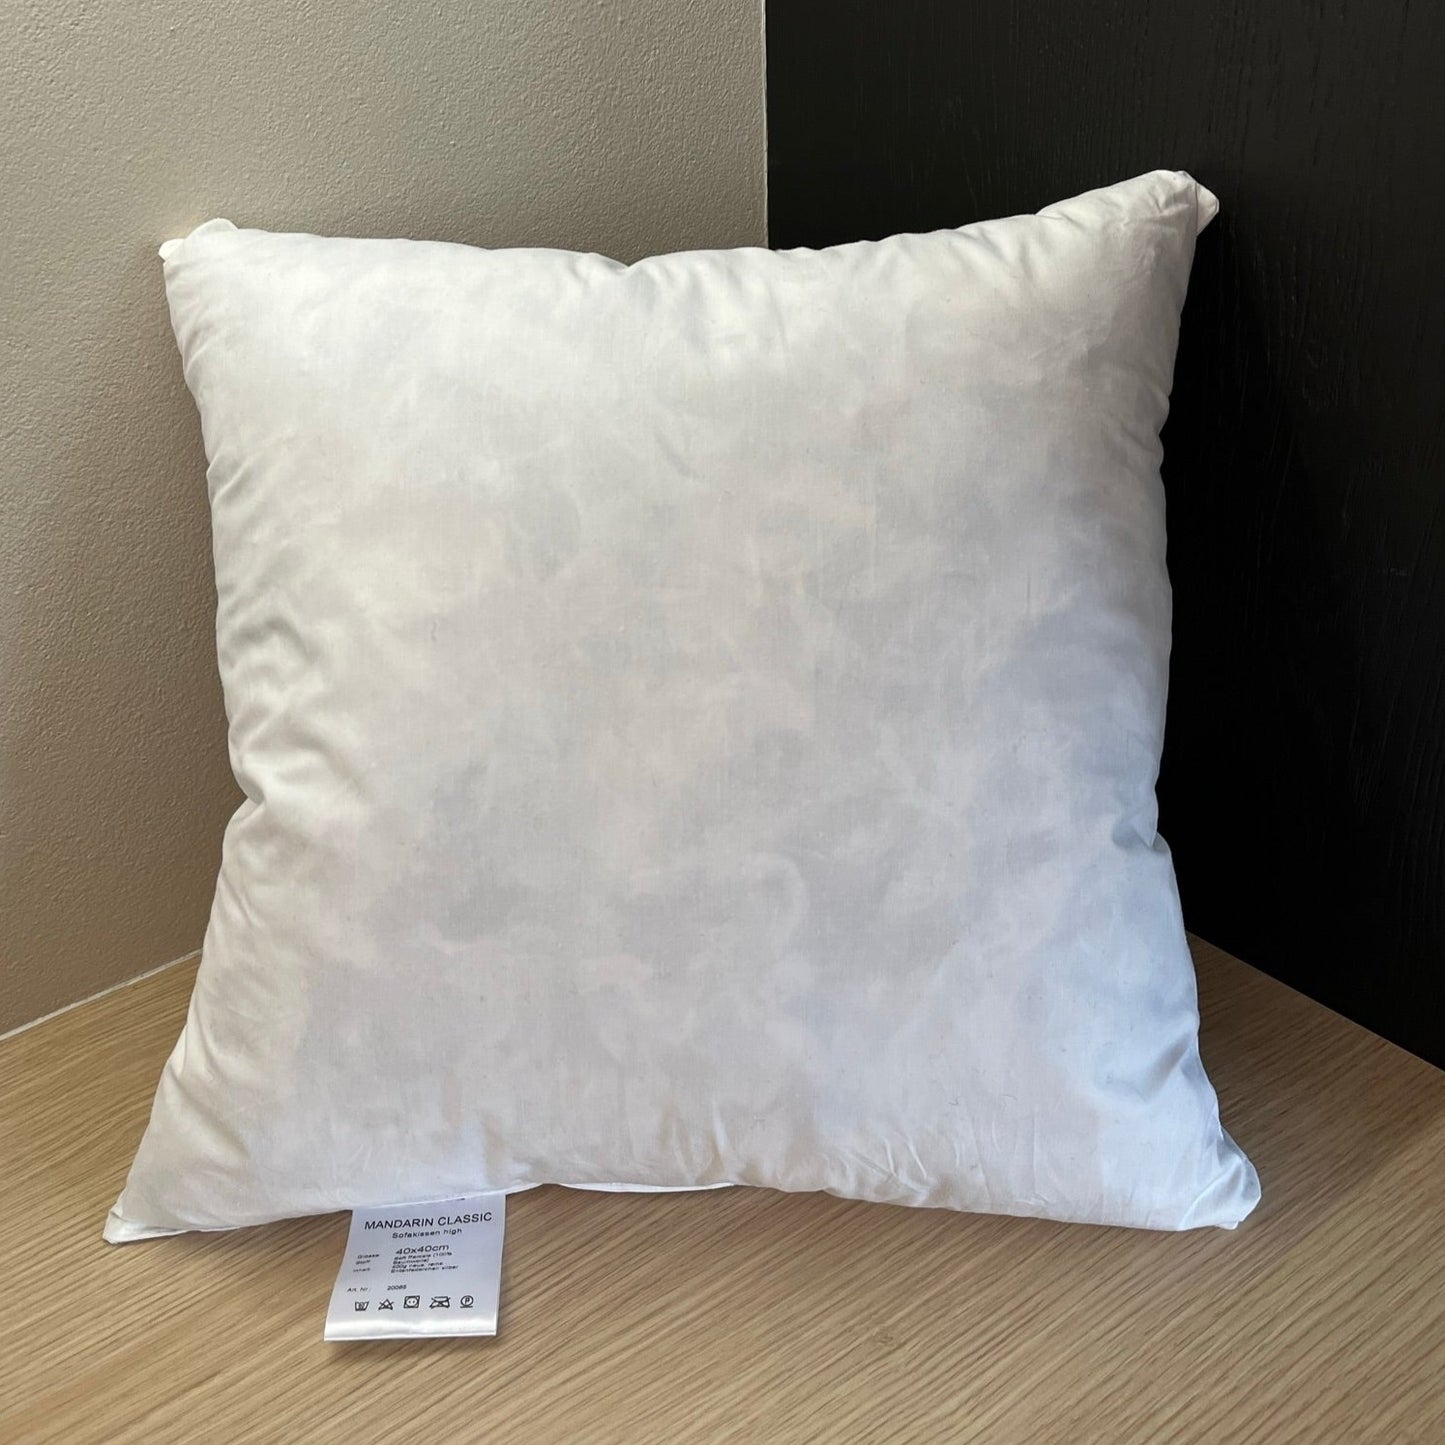 Cushion pad for decorative cushion cover